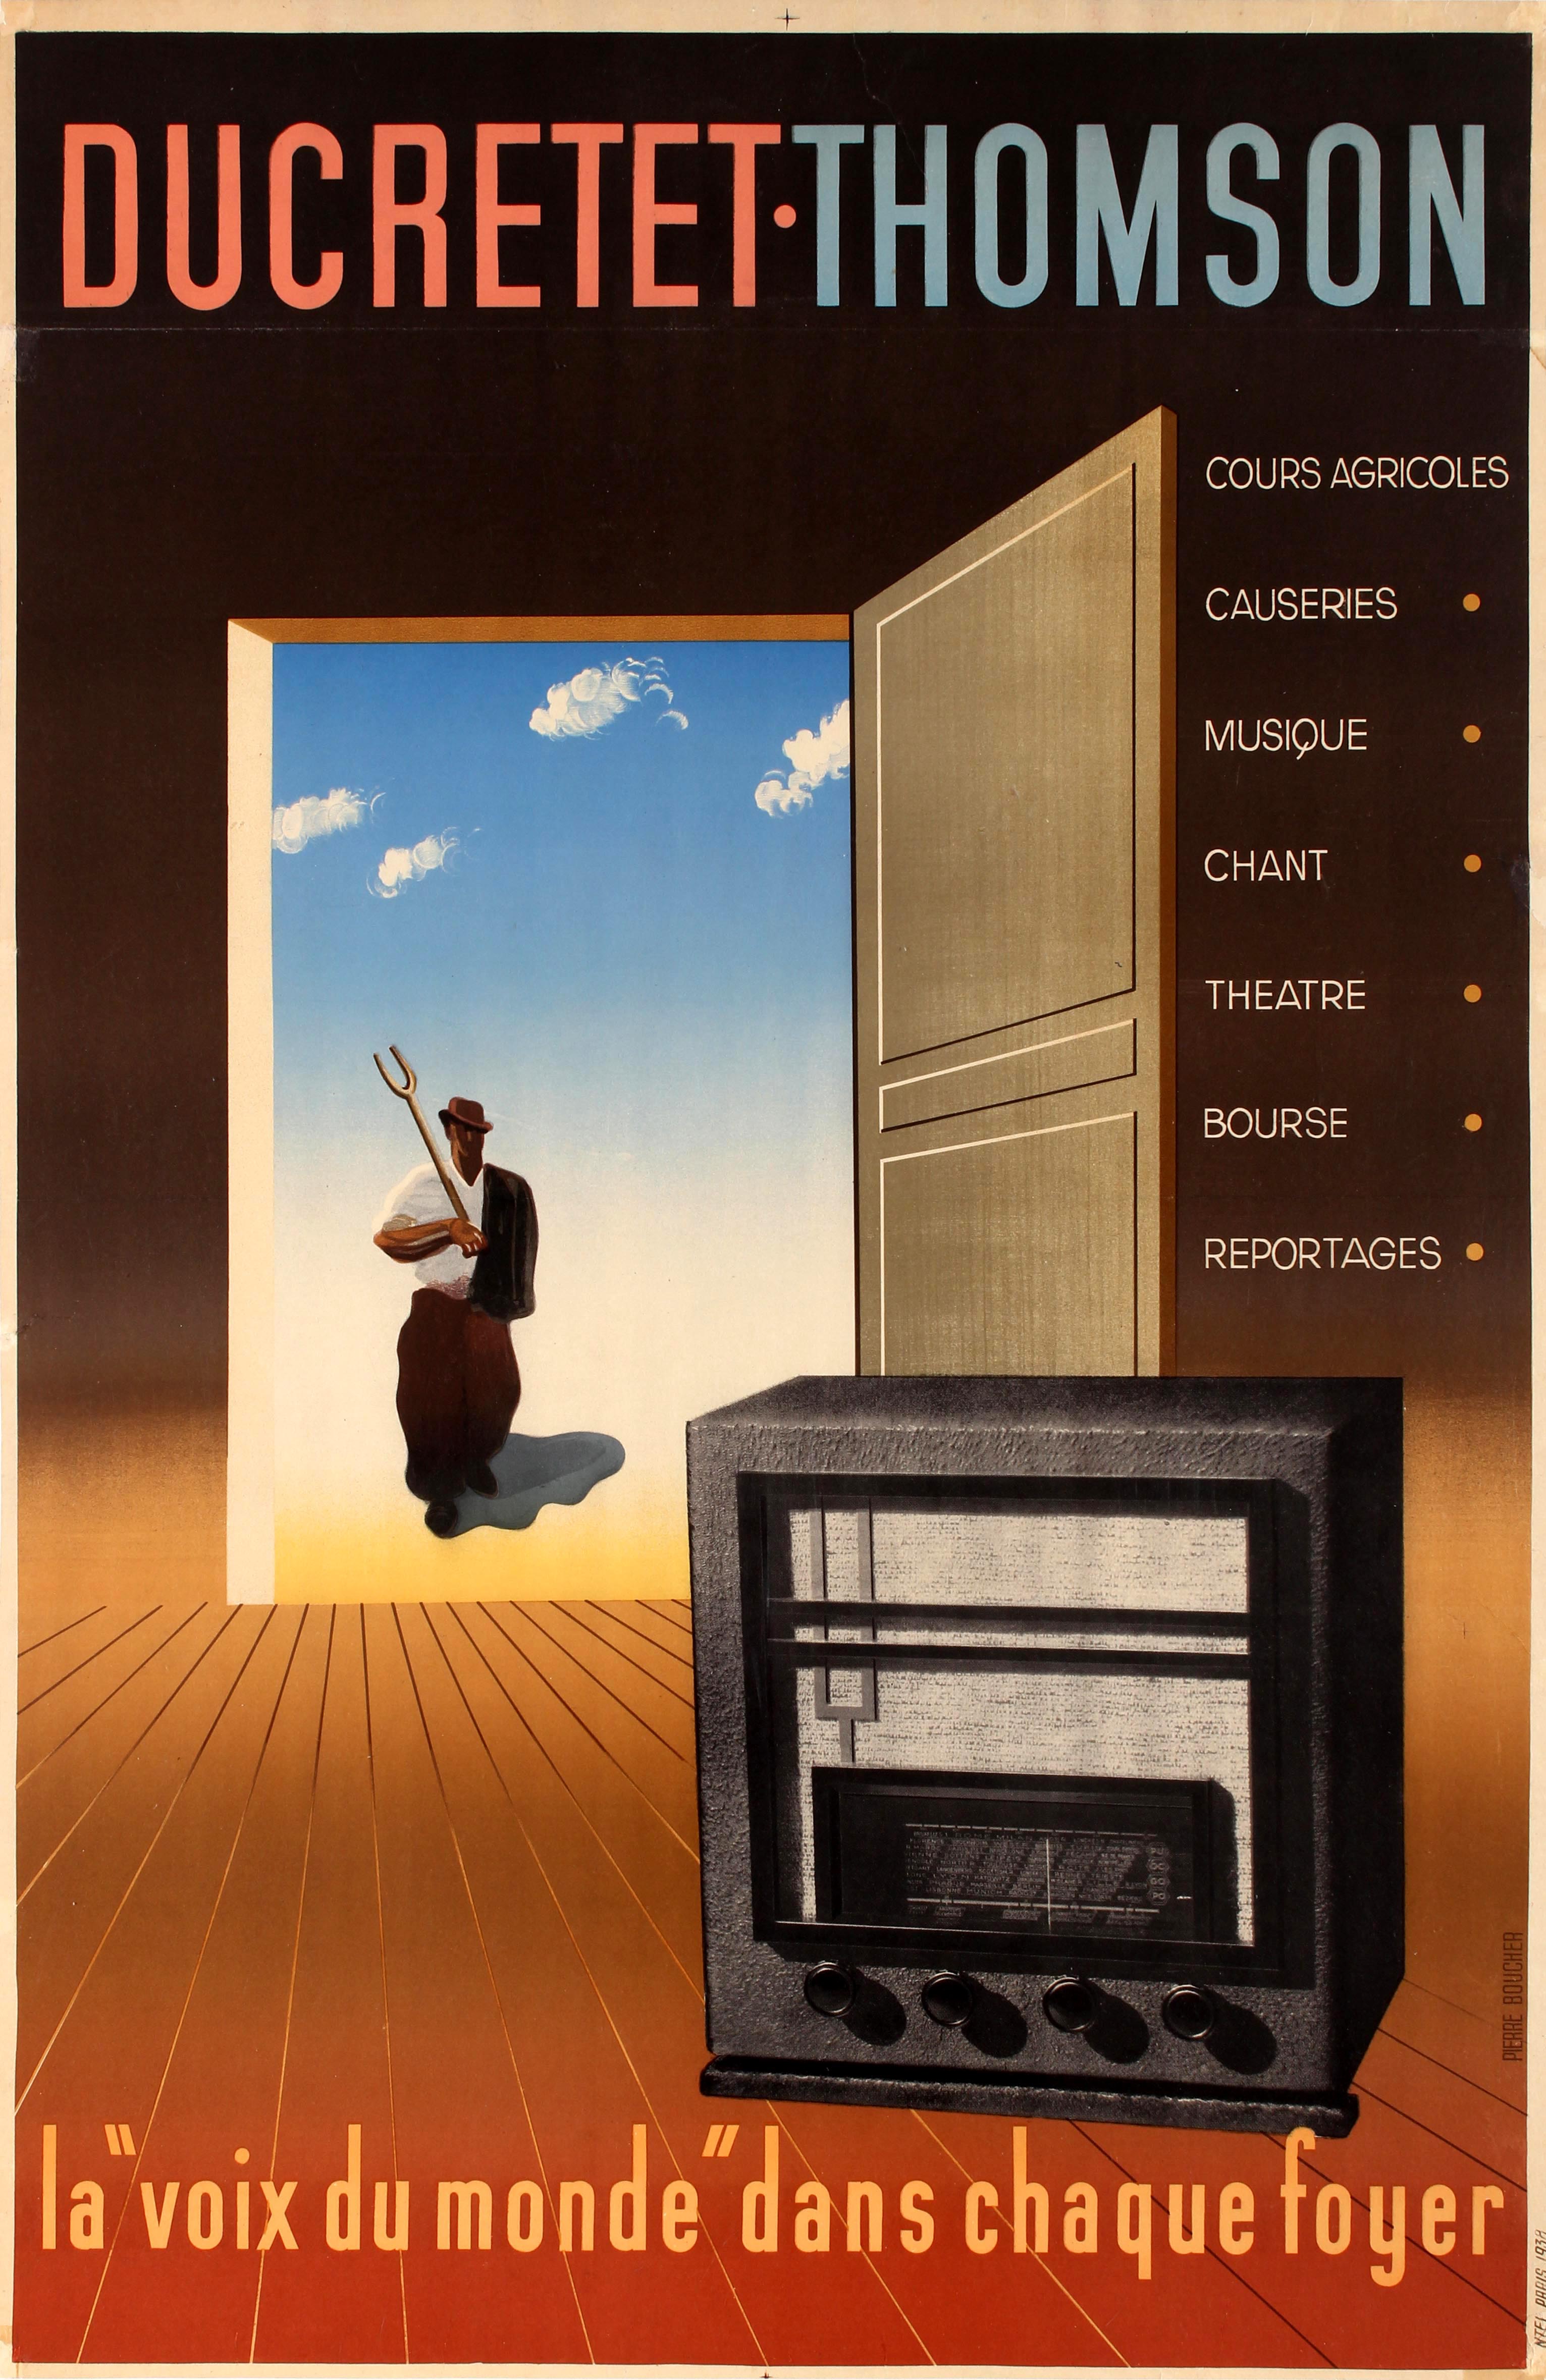 Advertising Poster Ducretet Thomson Radio Receiver Boucher Art Deco